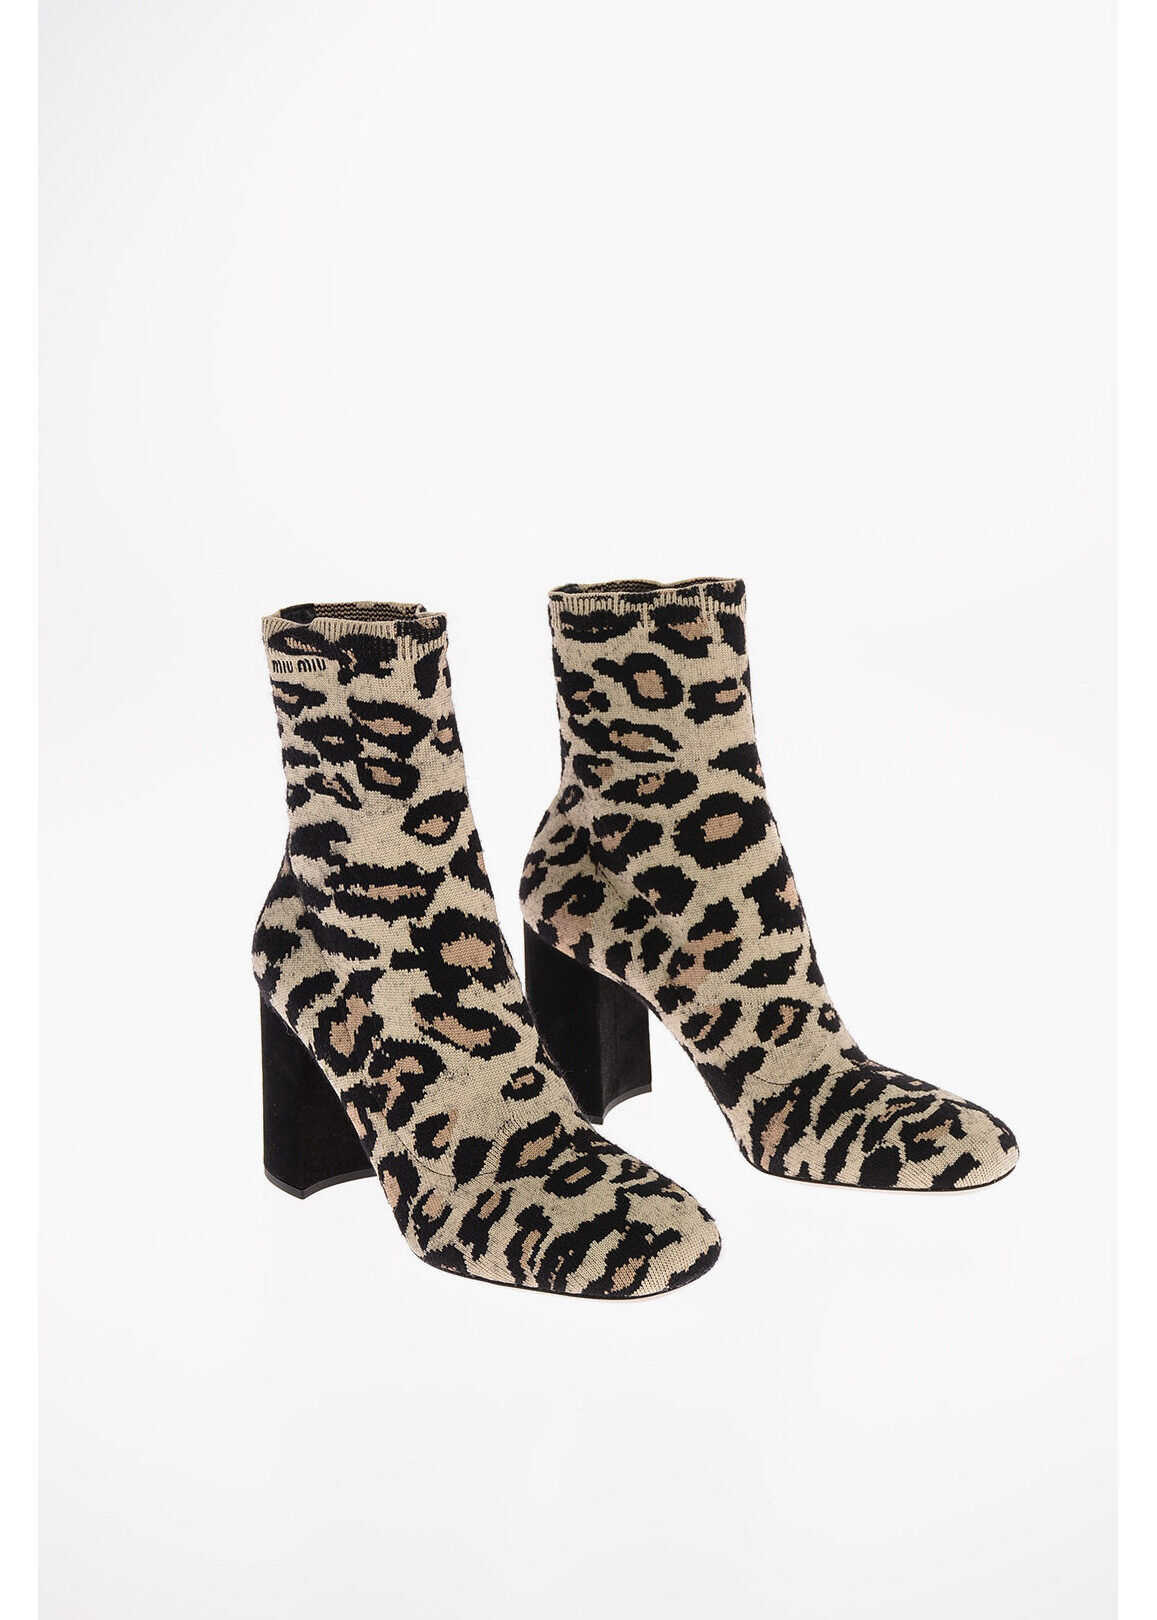 Miu Miu Animal Printed Sock Boots 9cm BEIGE